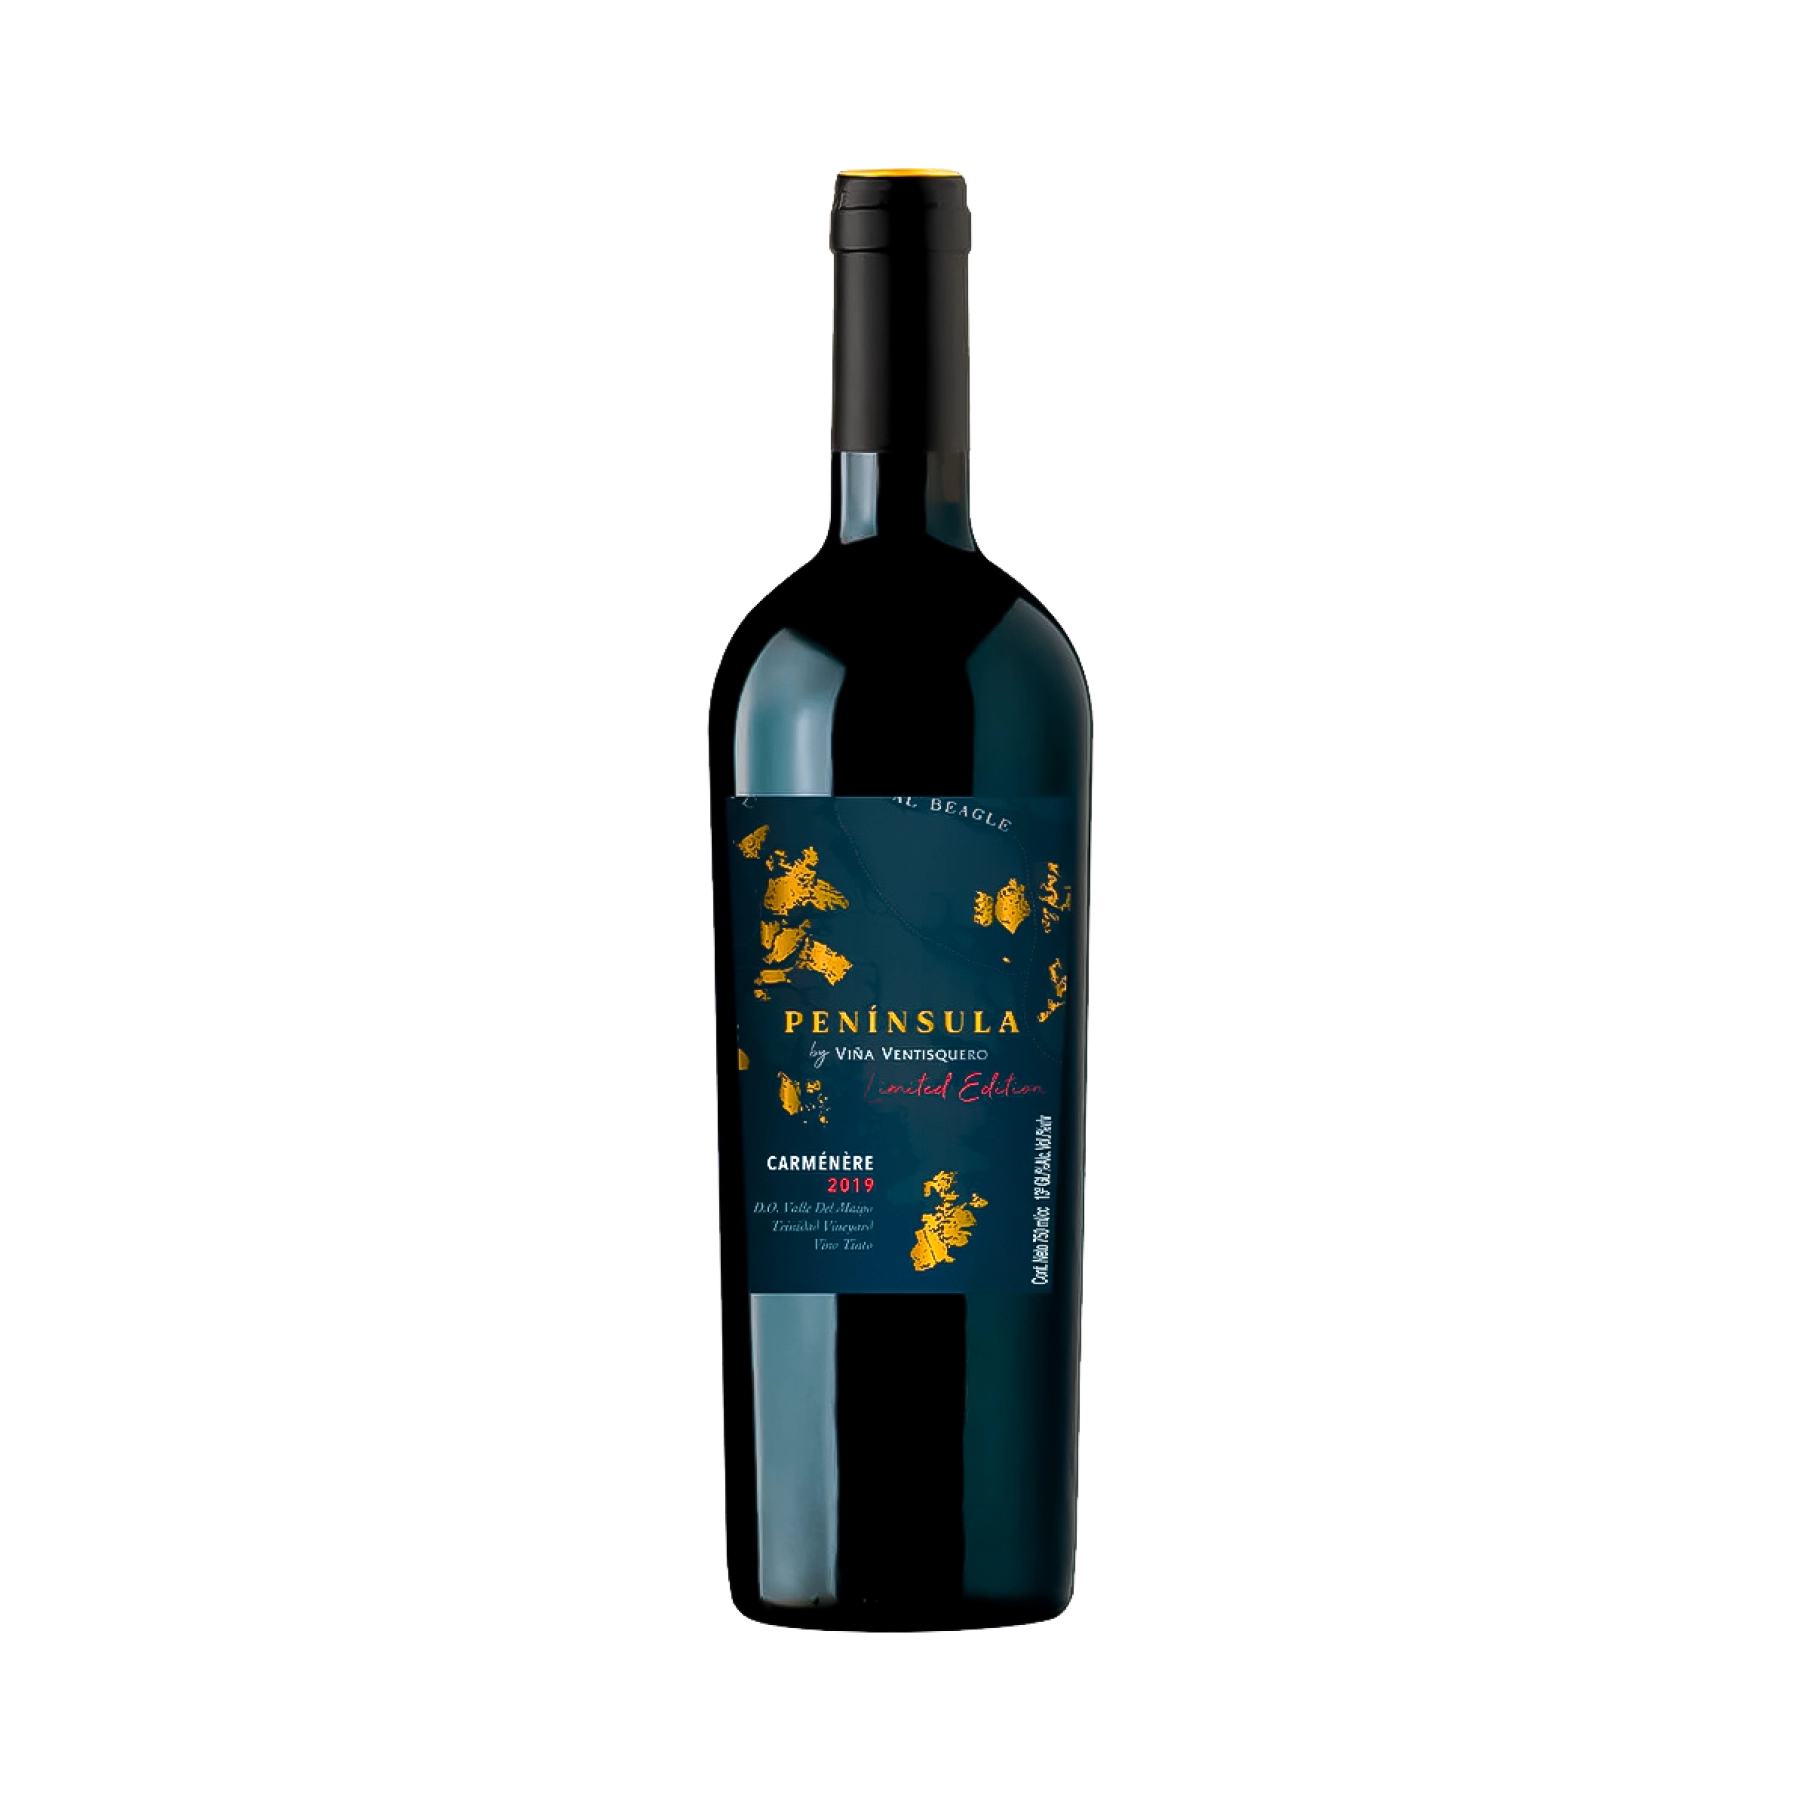 Rượu Vang Đỏ Chile Ventisquero Peninsula Limited Edition Carmenere